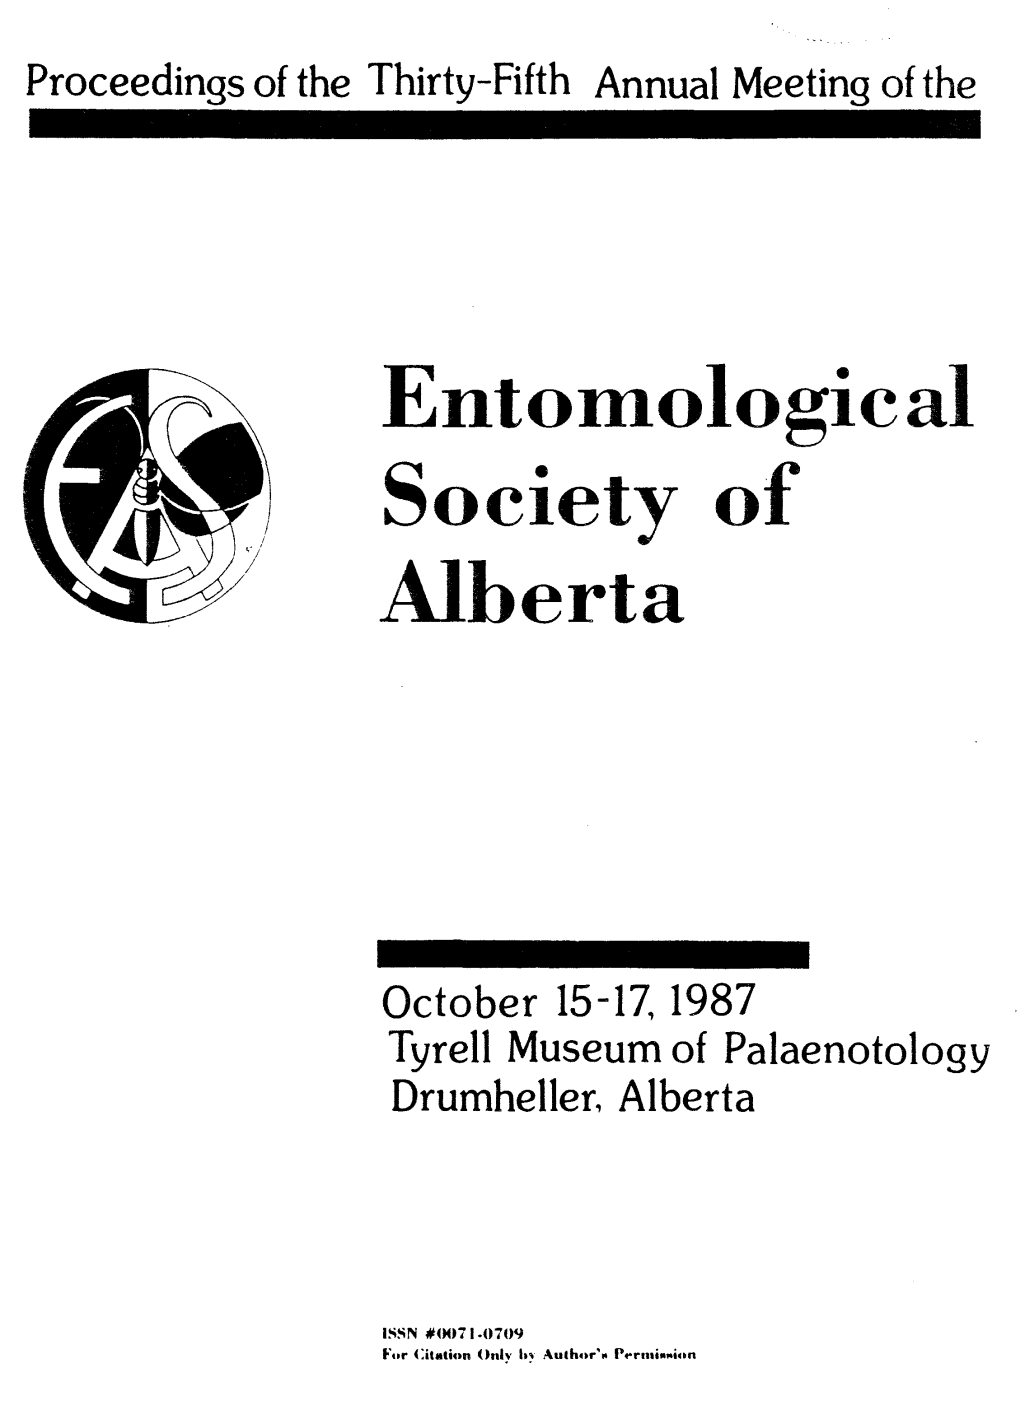 Proceedings of the Entomological Society of Alberta 1987